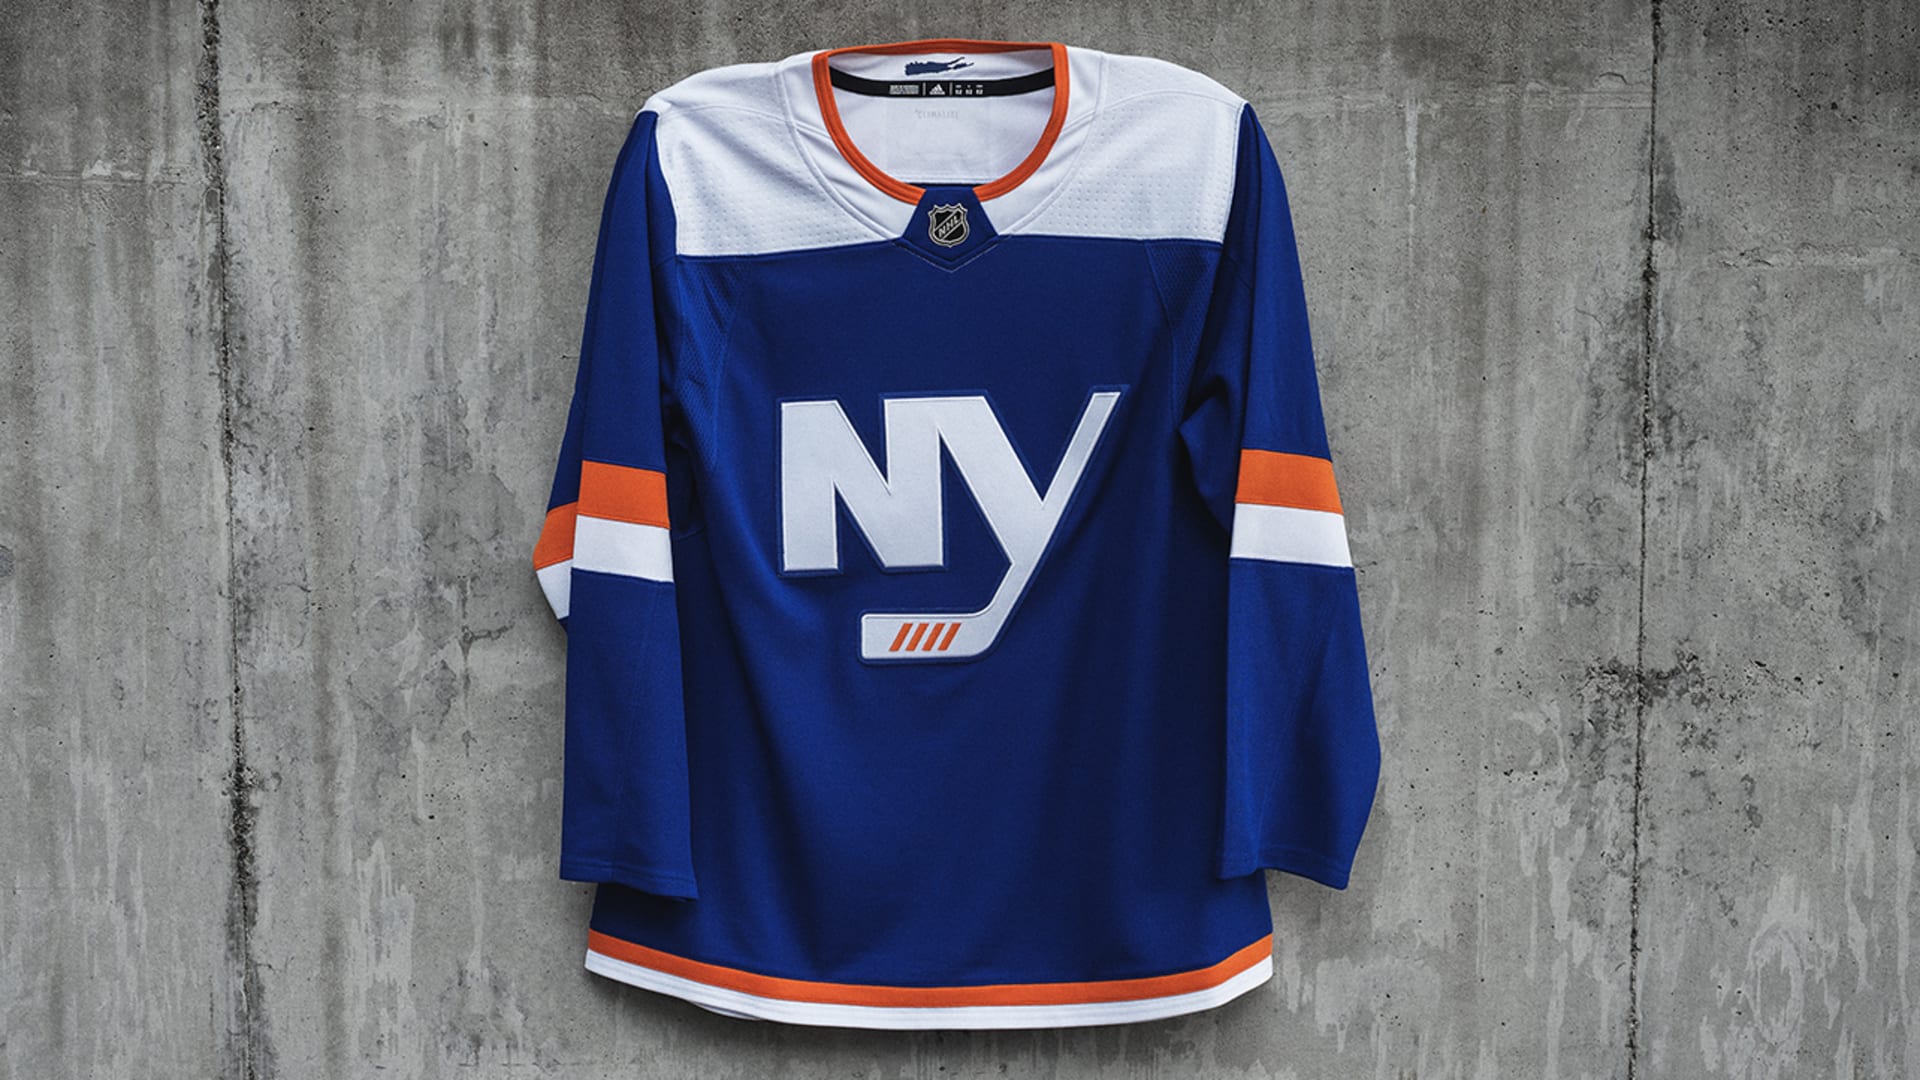 New York Islanders, Alternate Jersey Concept : r/hockeyjerseys